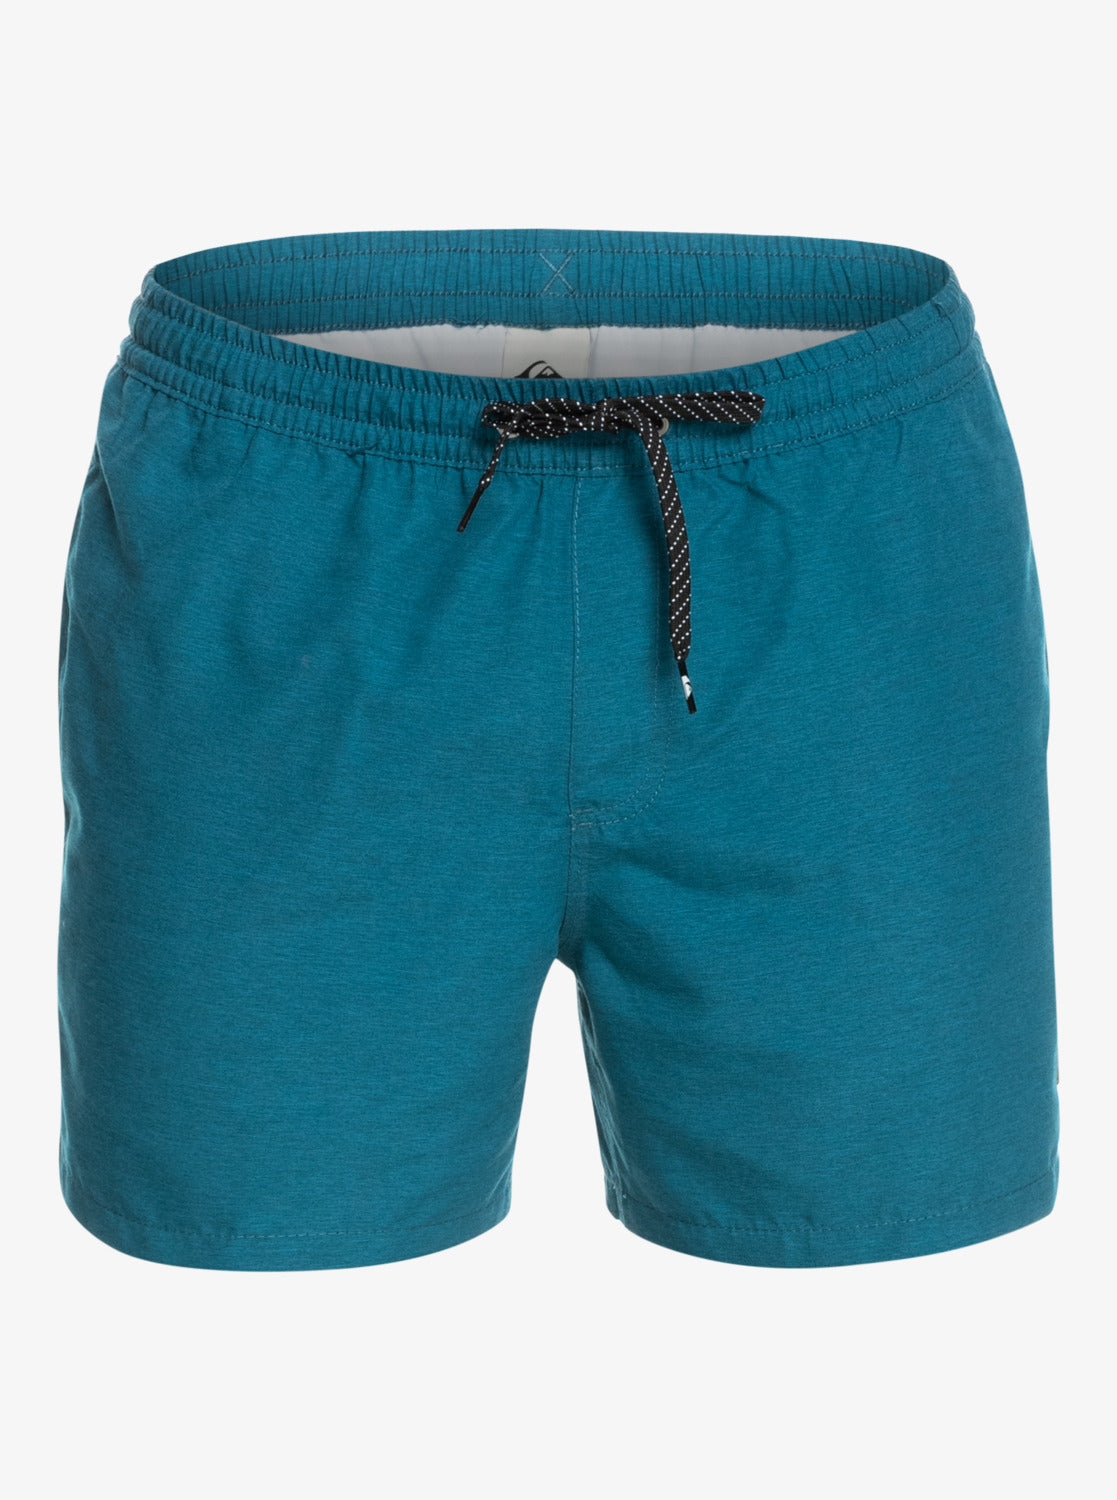 Quiksilver Everyday Deluxe 15" Swim Shorts in Blue Heather